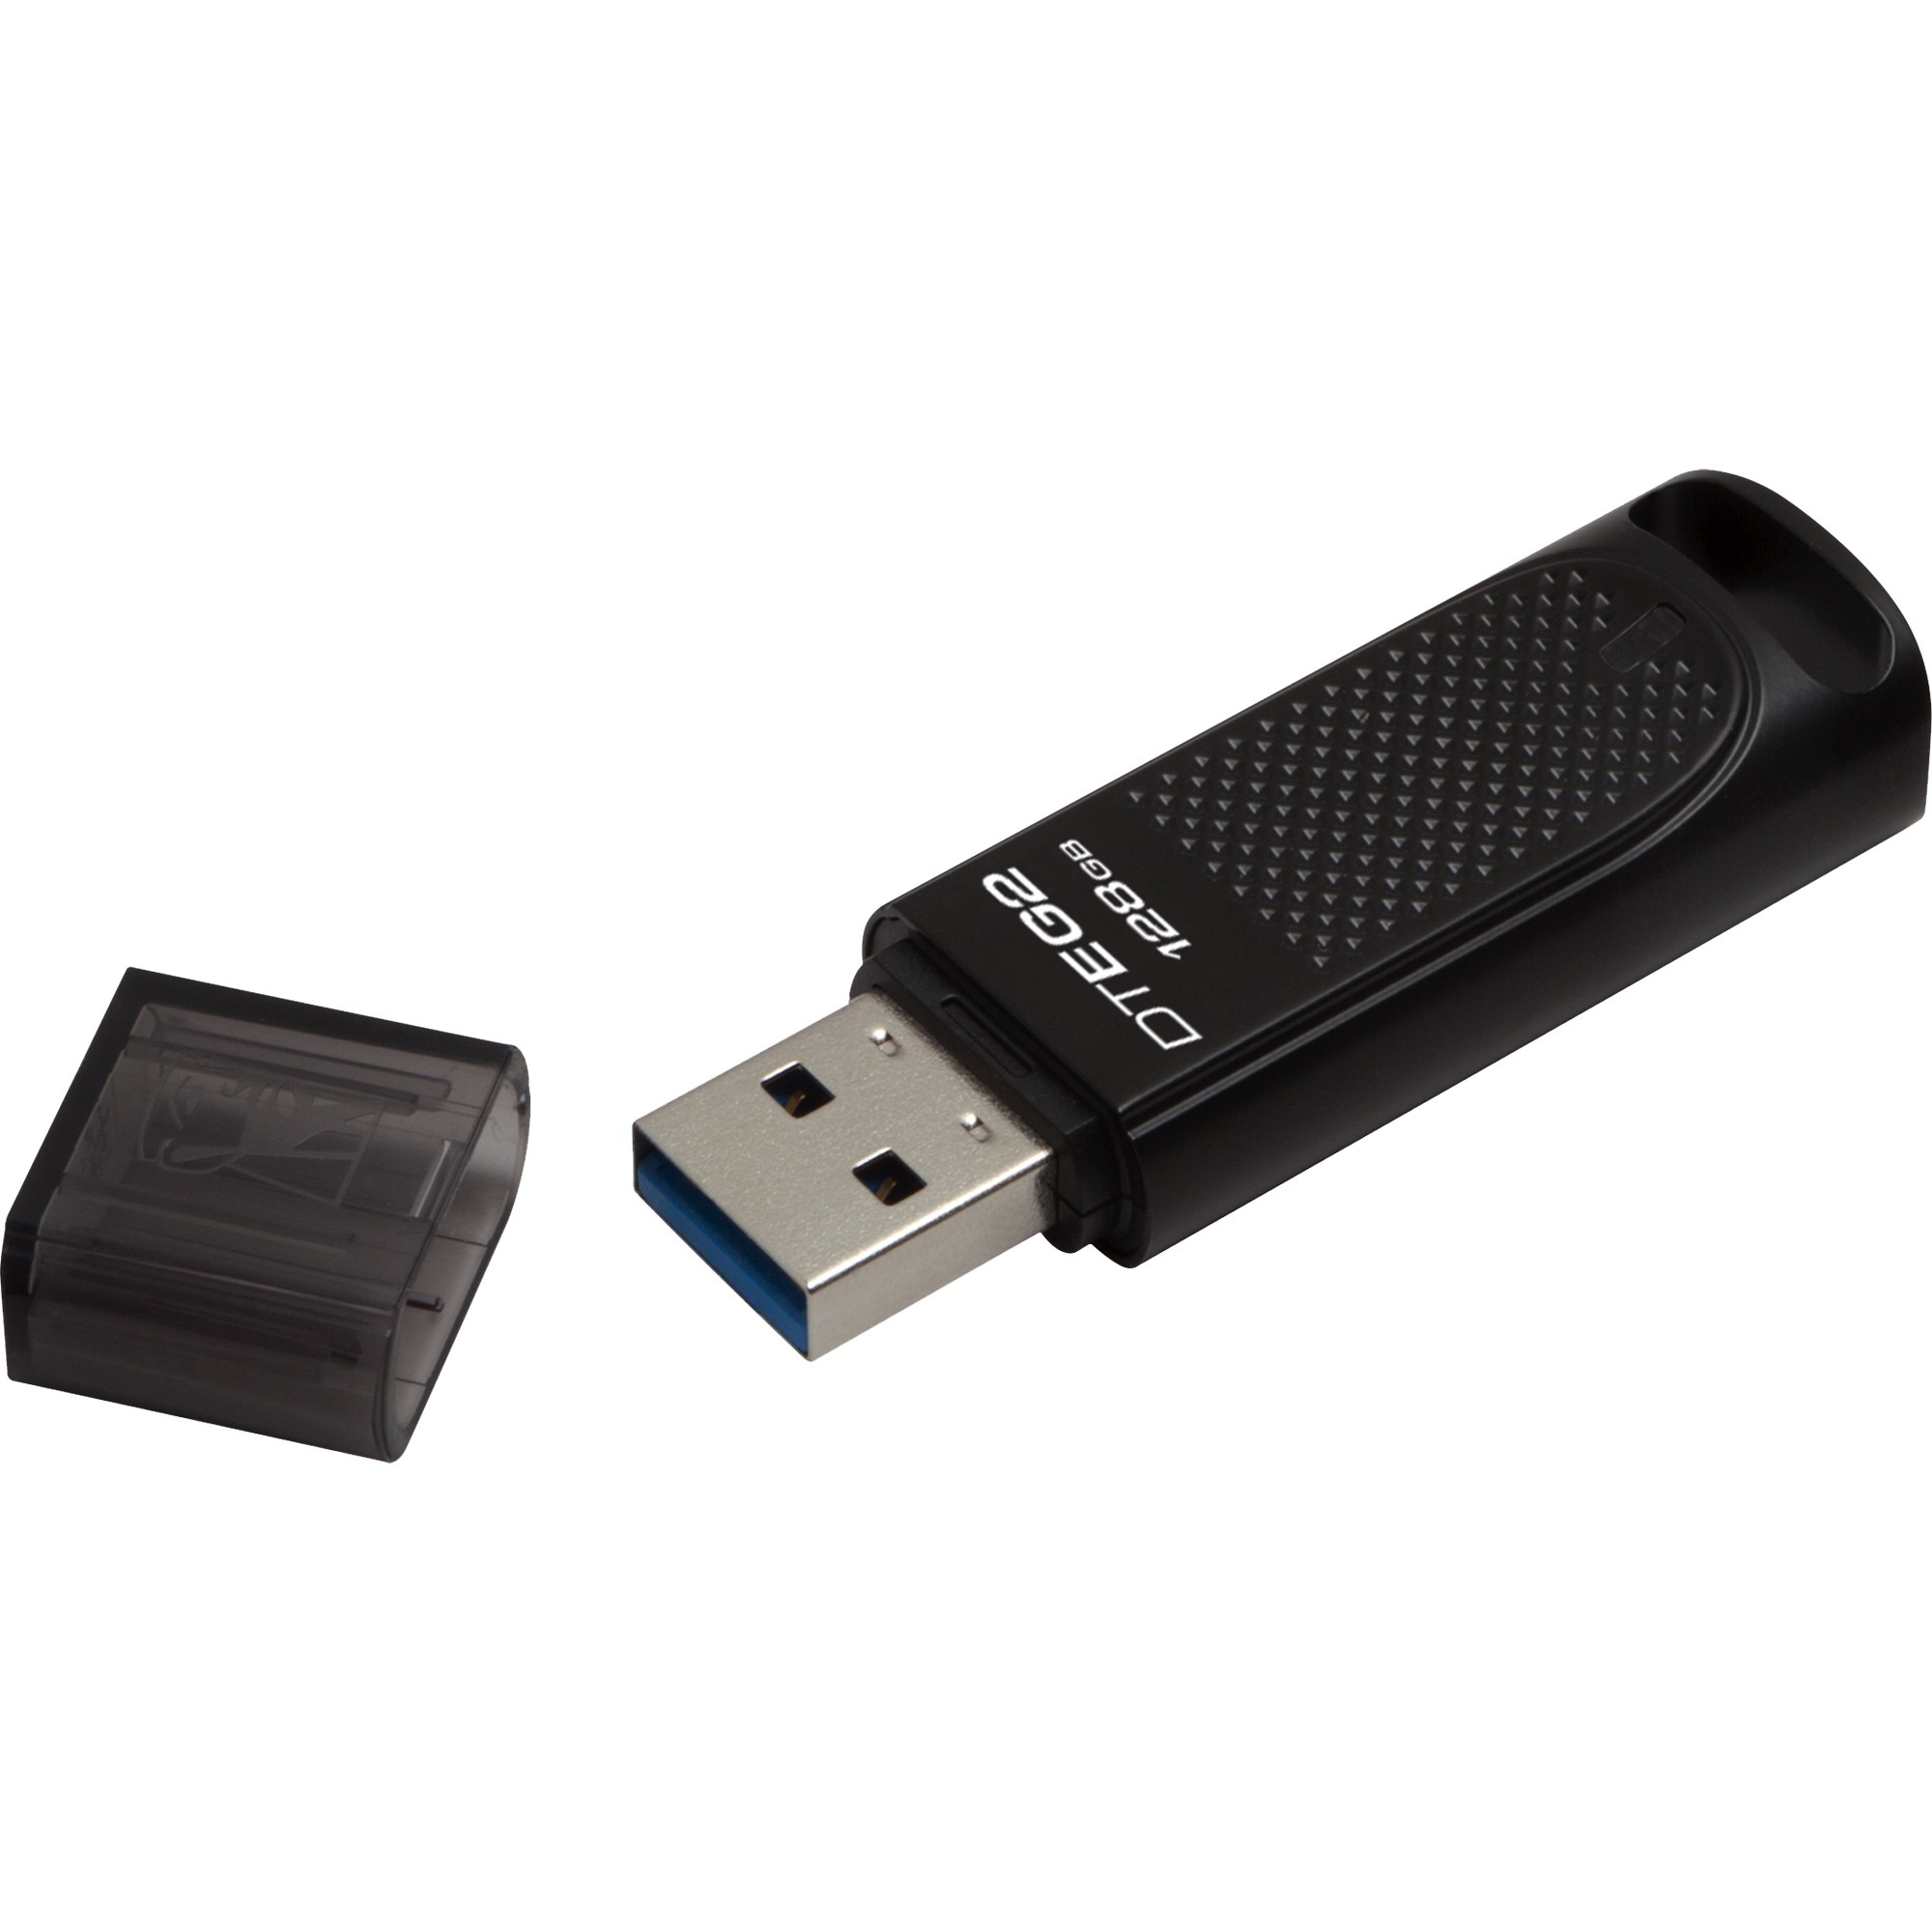 DataTraveler Elite G2, 128GB pami?? USB 3.0 (3.1 Gen 1) Z??cze USB typu A Czarny, No?nik Pendrive USB